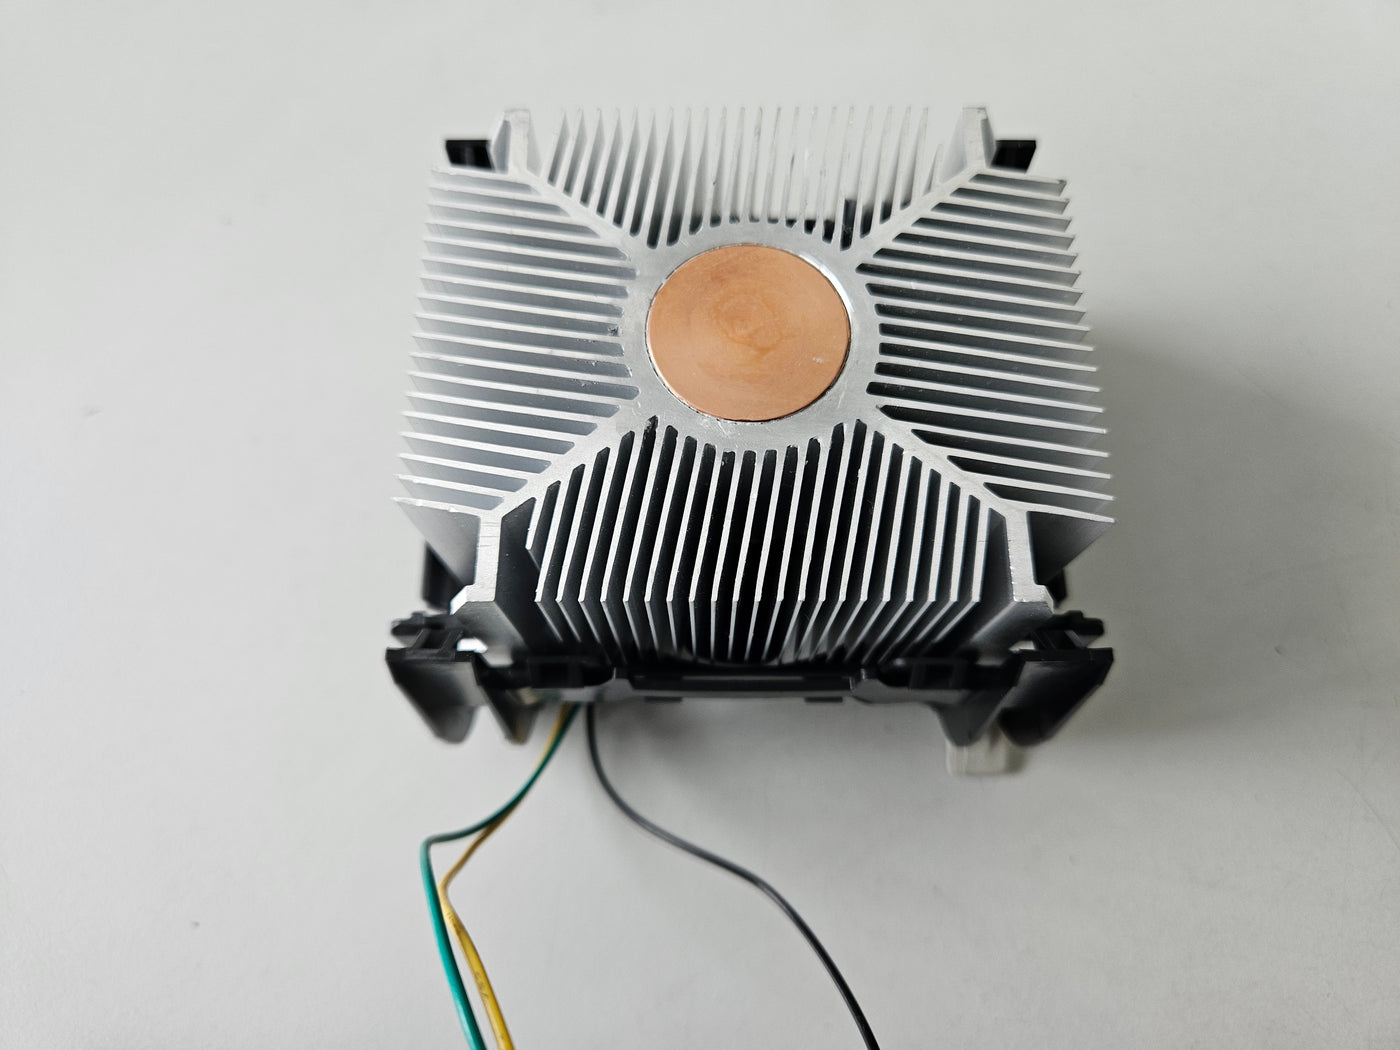 Intel 12VDC 0.16A Socket 478 Fan and Heatsink Assembly ( C91249-001 ) USED